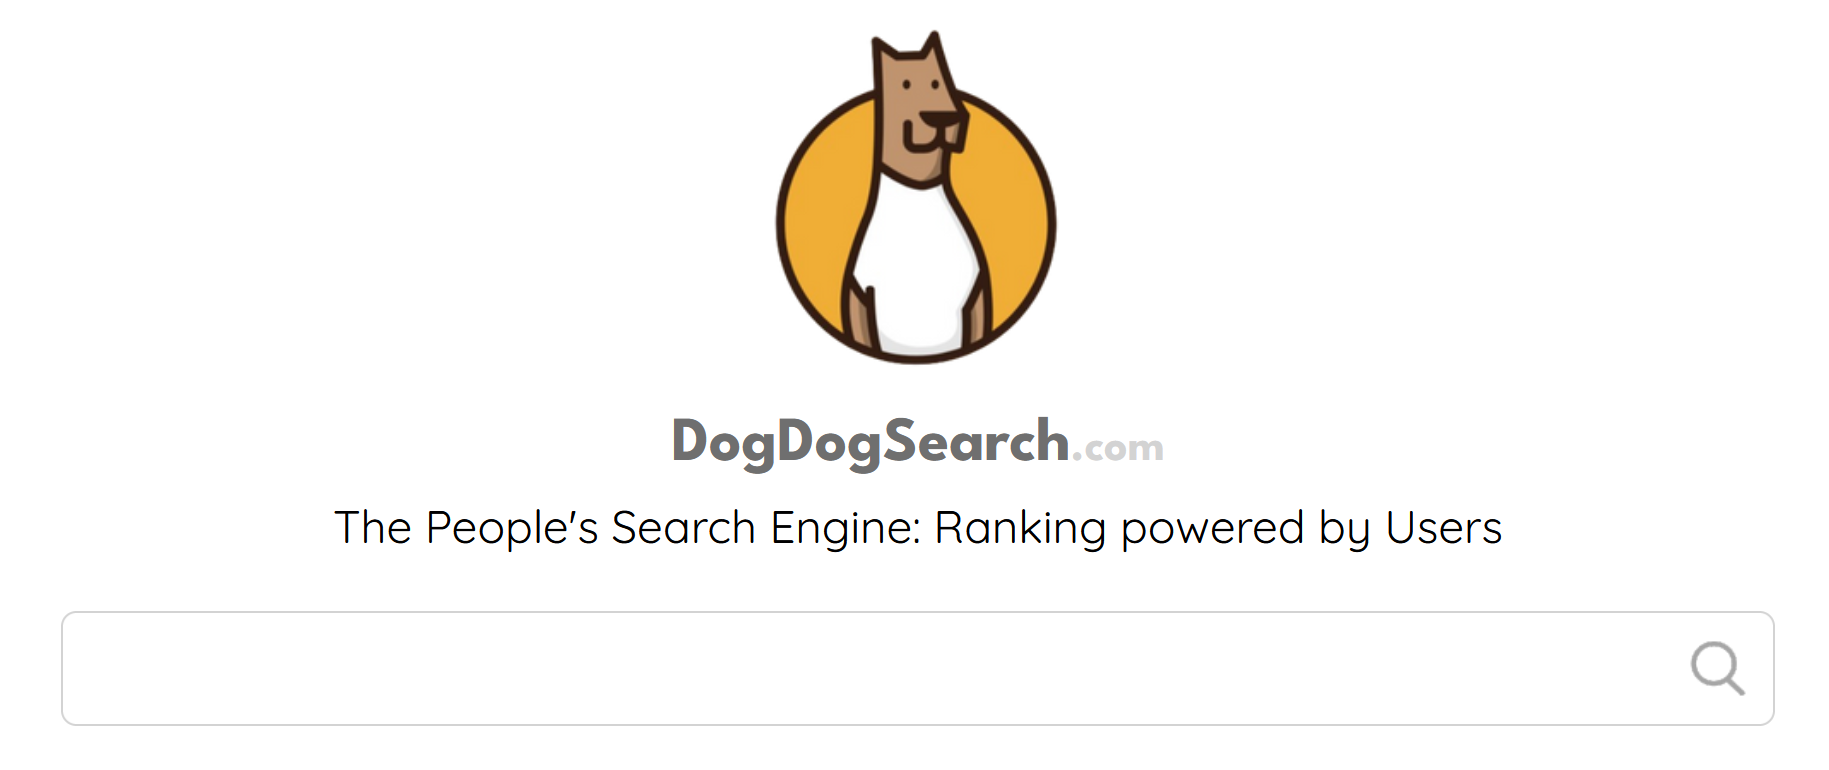 DogDogSearch.com